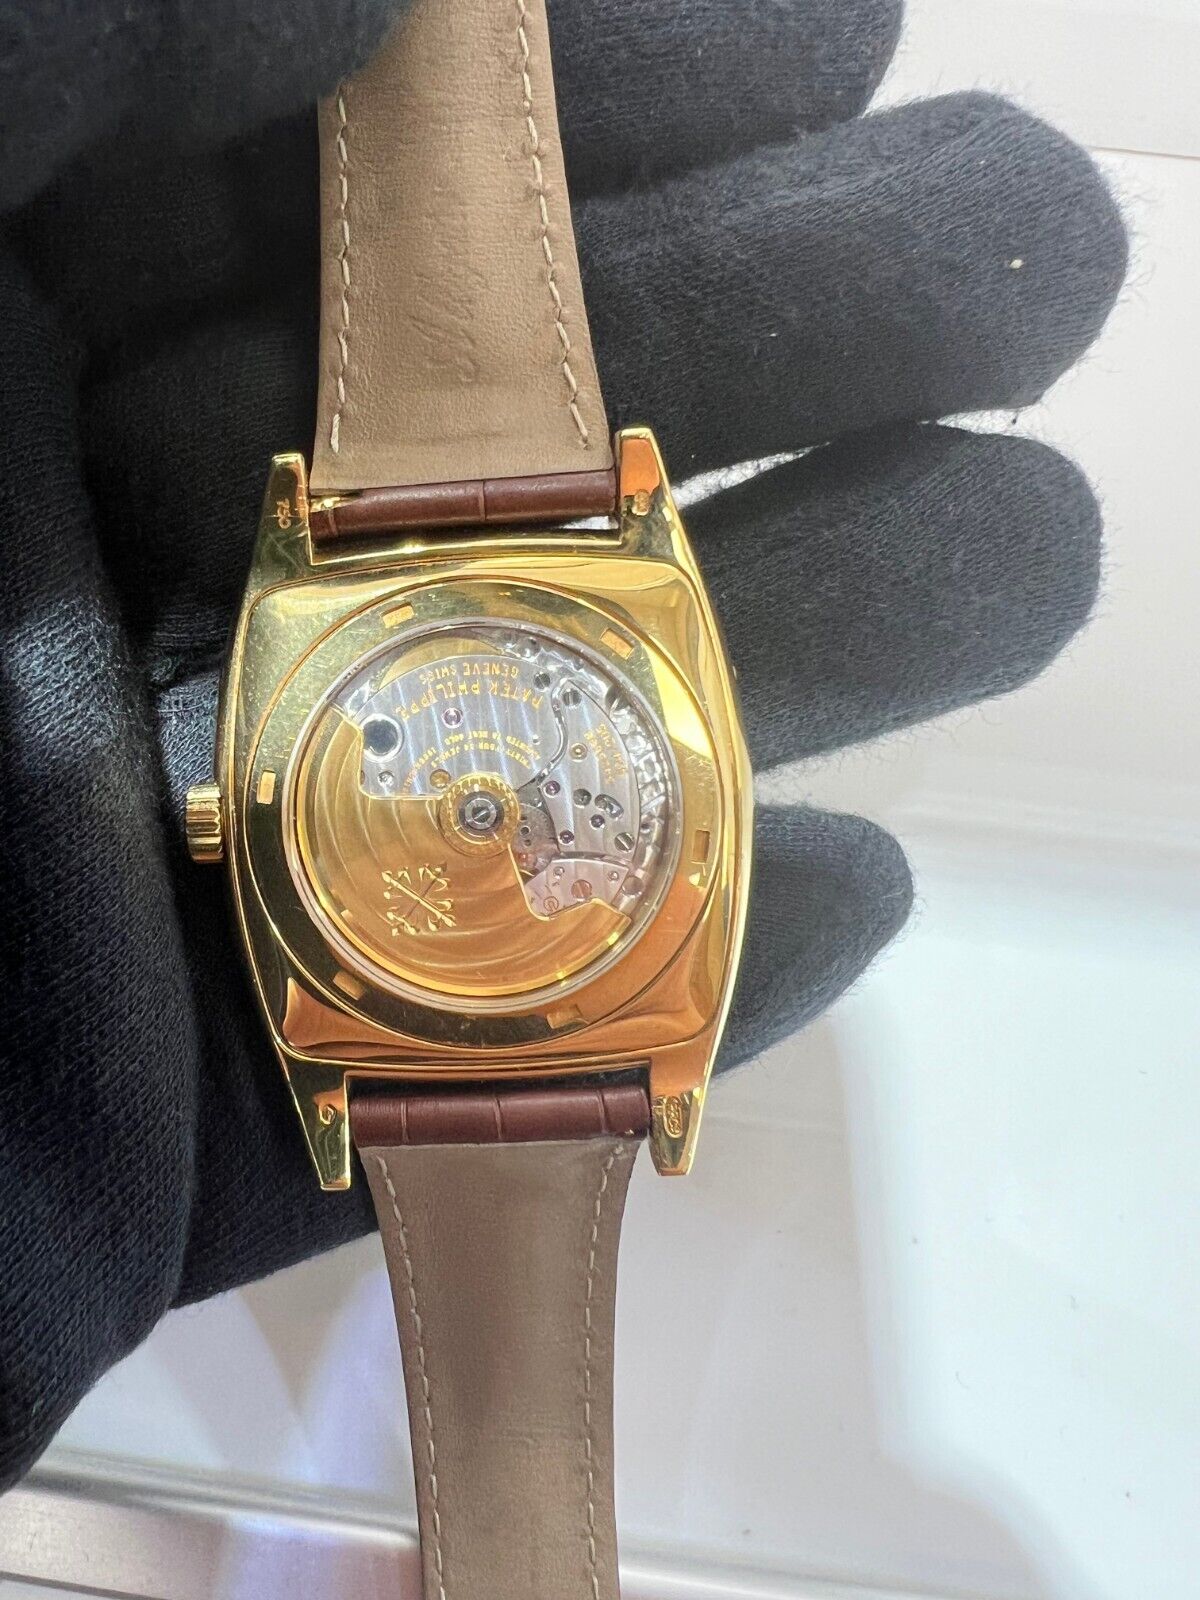 Patek Philippe Grand Complications Silver Men's Watch - 5135J